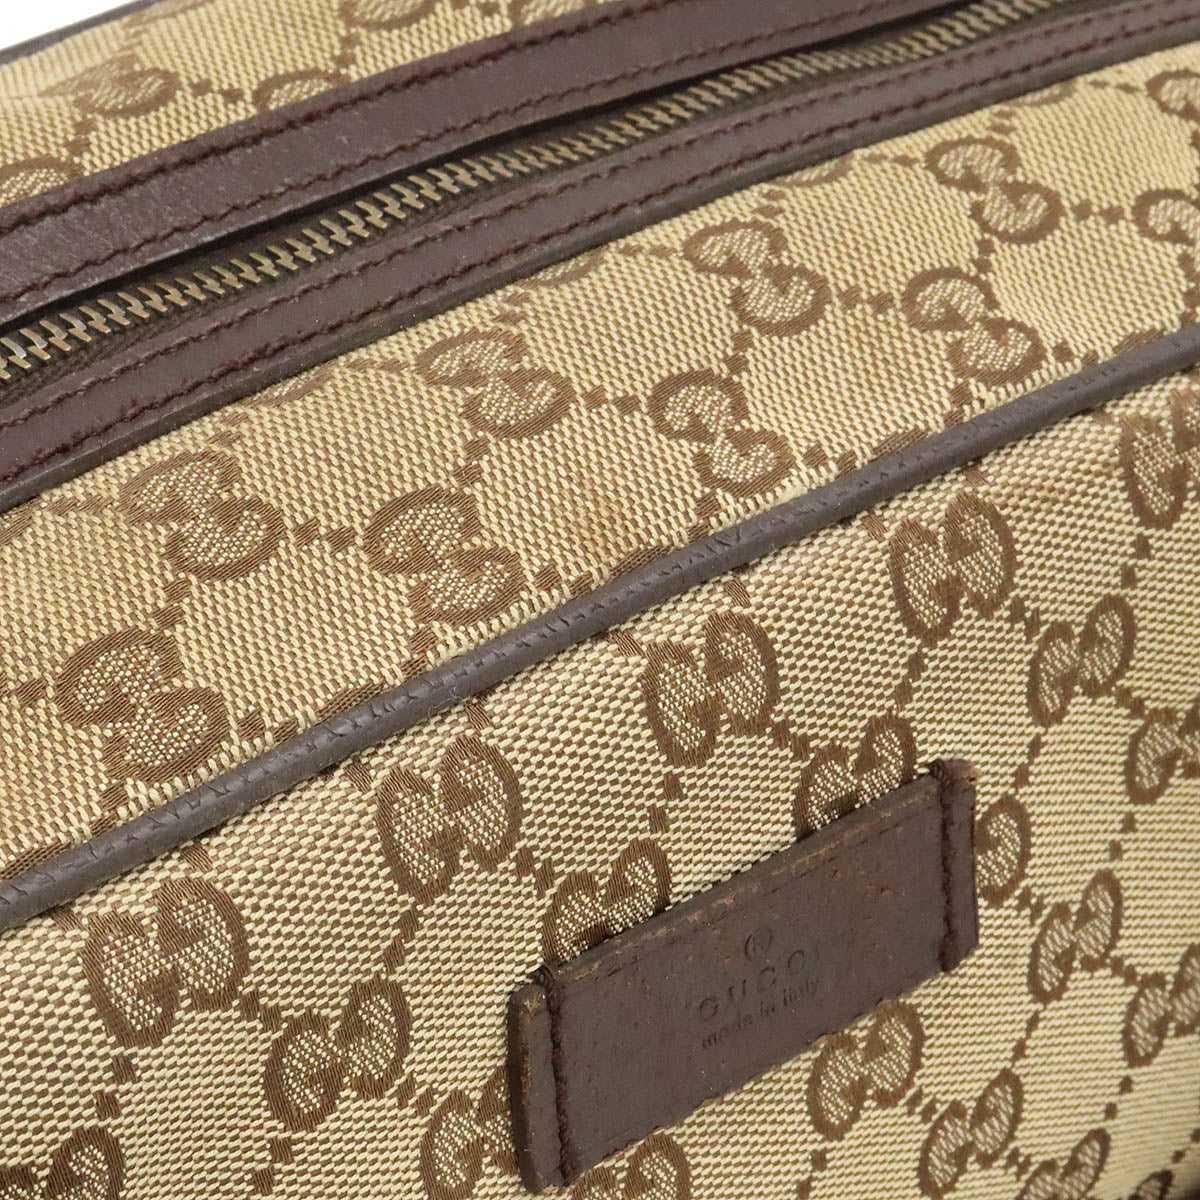 GUCCI GUCCI Gucci GG canvas shelly line  bag shoulder bag shoulder leather carcass dark brown tea 189753